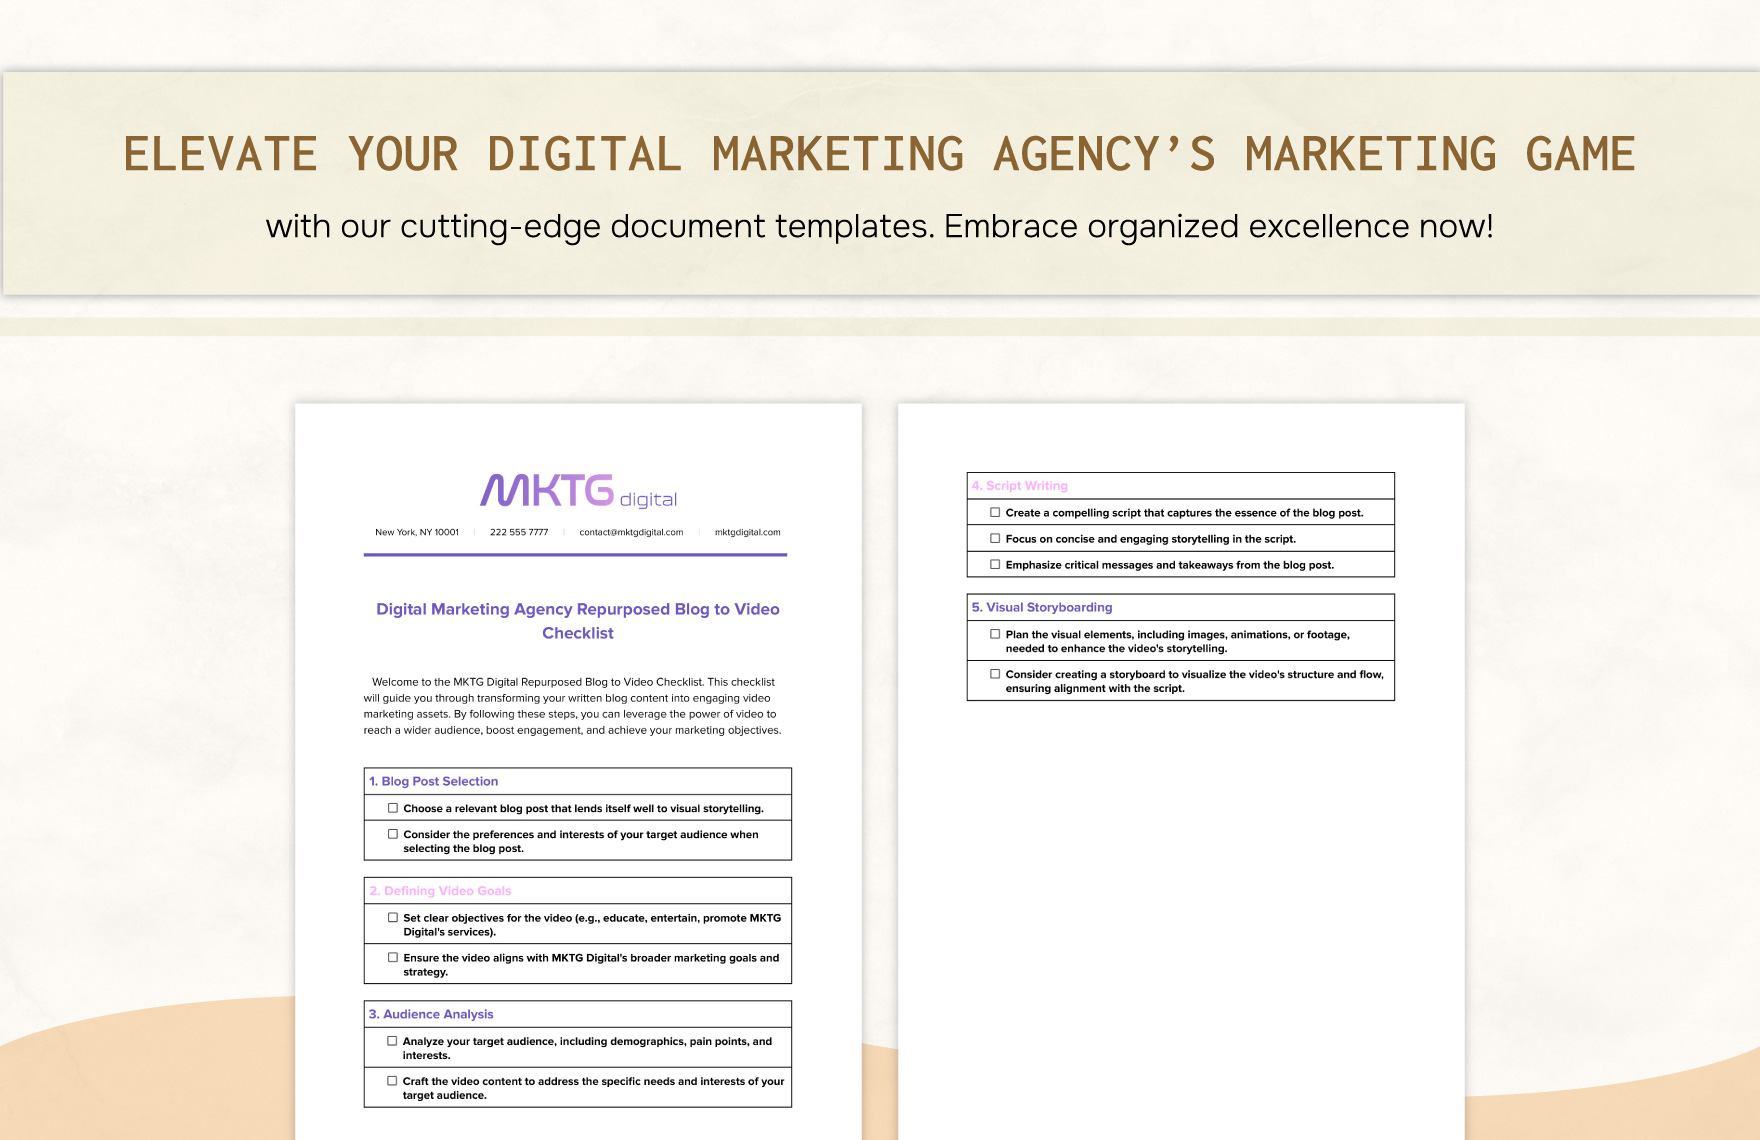 Digital Marketing Agency Repurposed Blog to Video Checklist Template